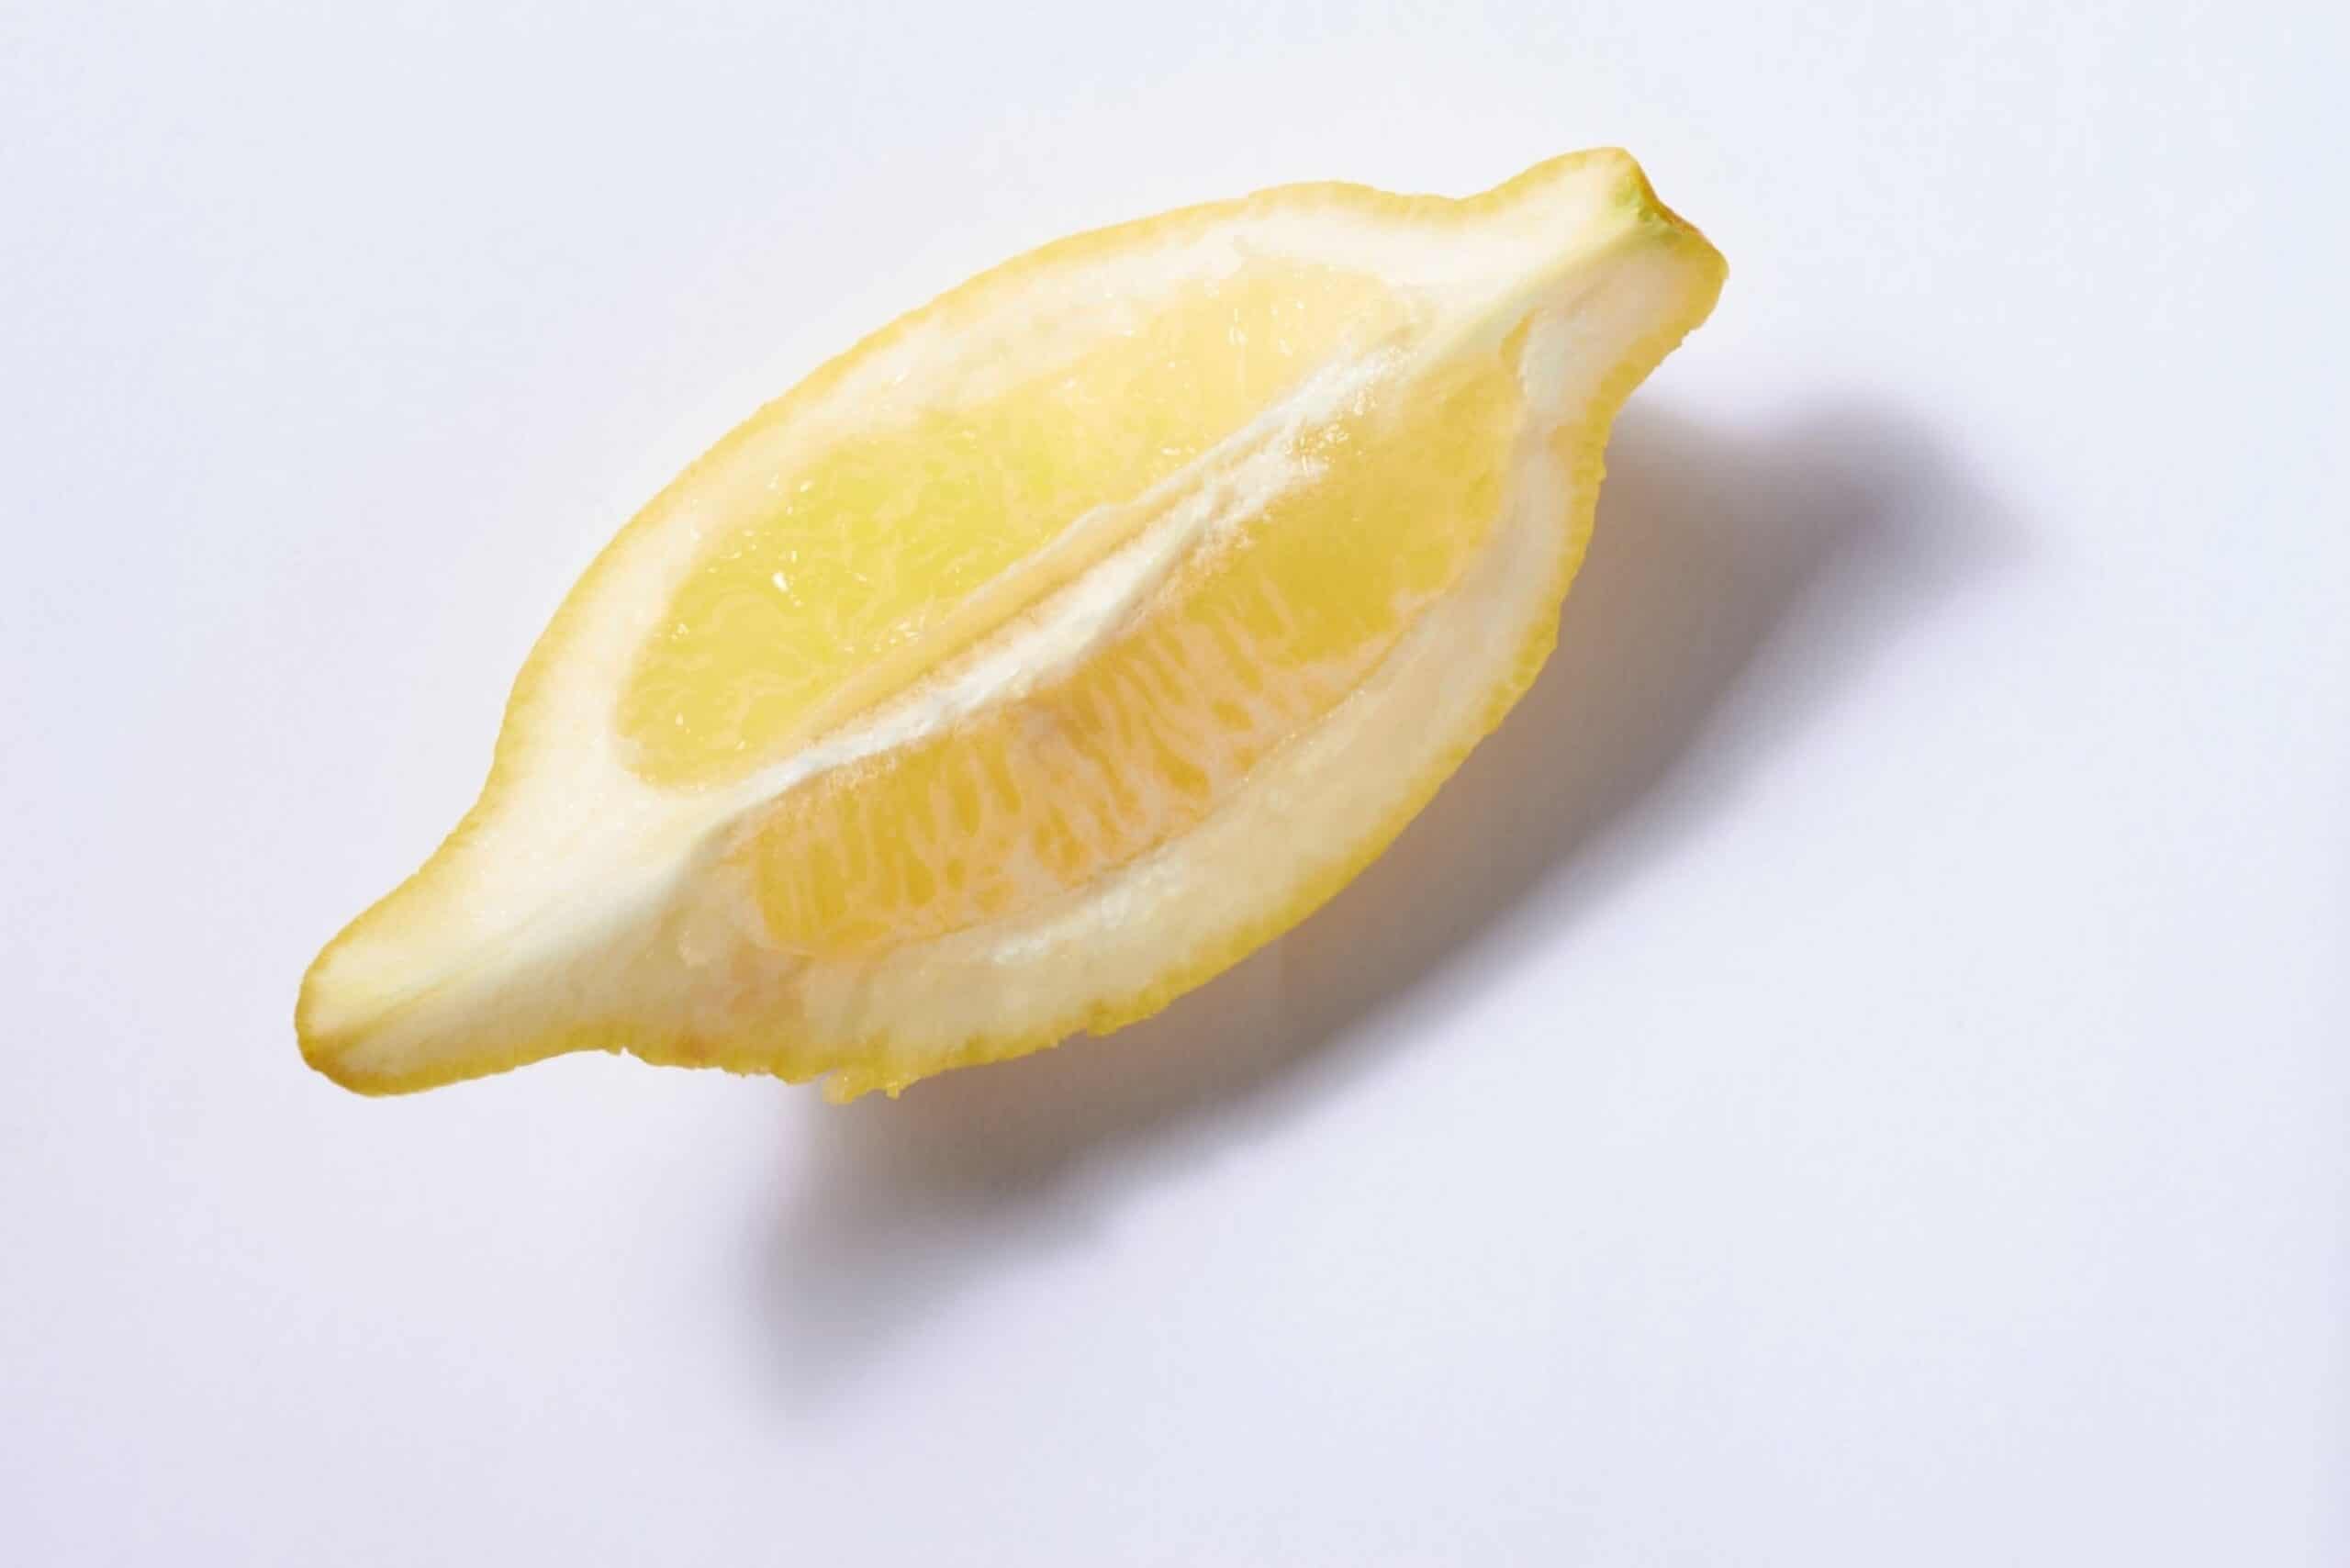 A piece of lemon on a white background